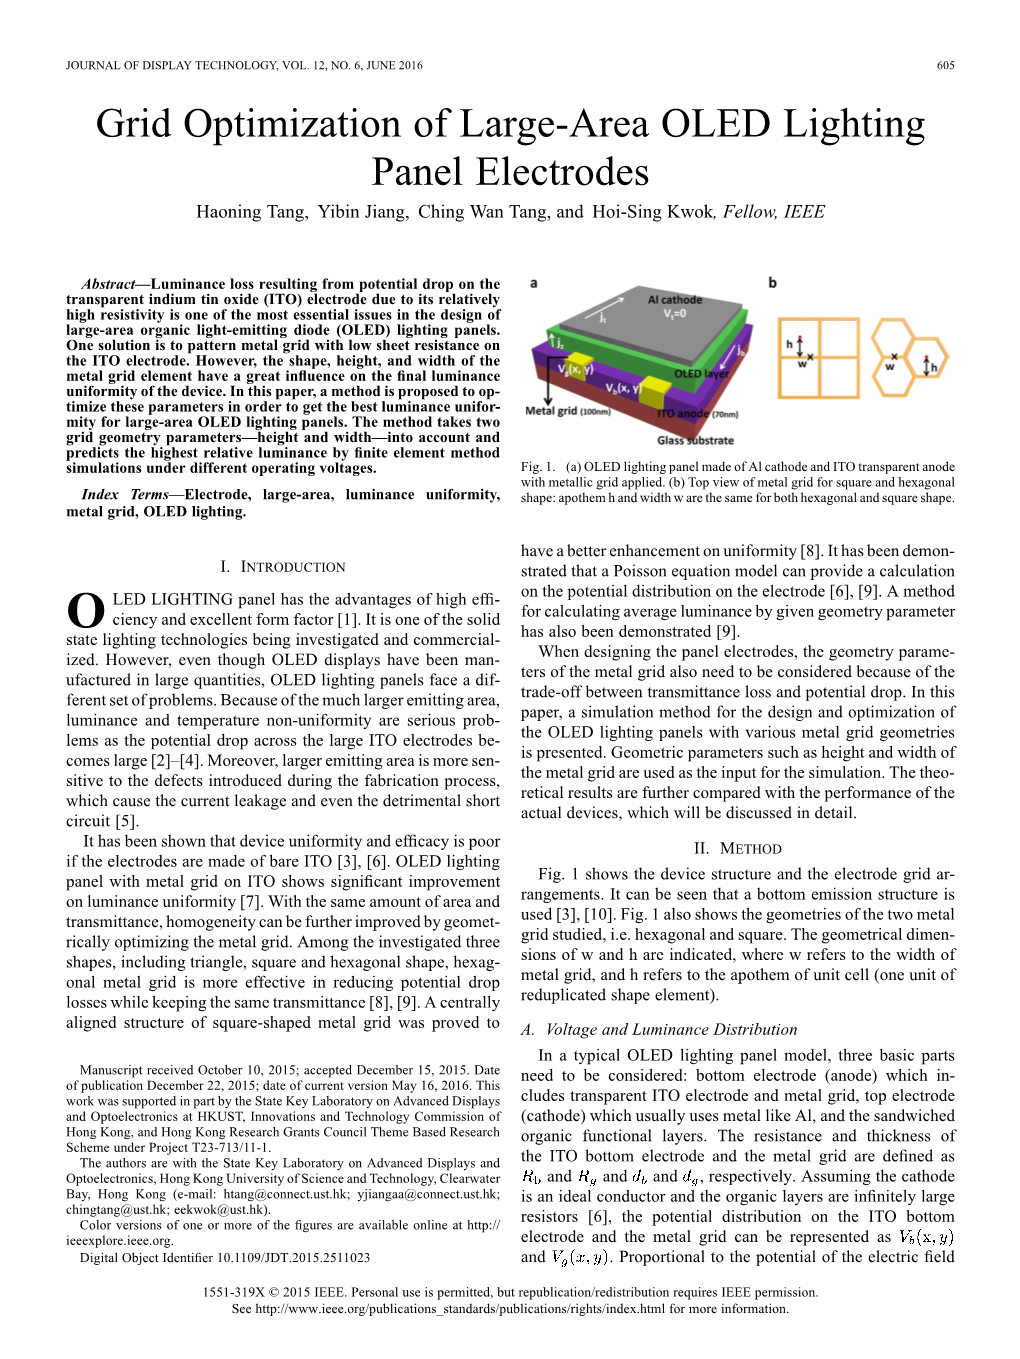 Grid Optimization of Large-Area OLED Lighting Panel Electrodes Haoning Tang, Yibin Jiang, Ching Wan Tang, and Hoi-Sing Kwok, Fellow, IEEE